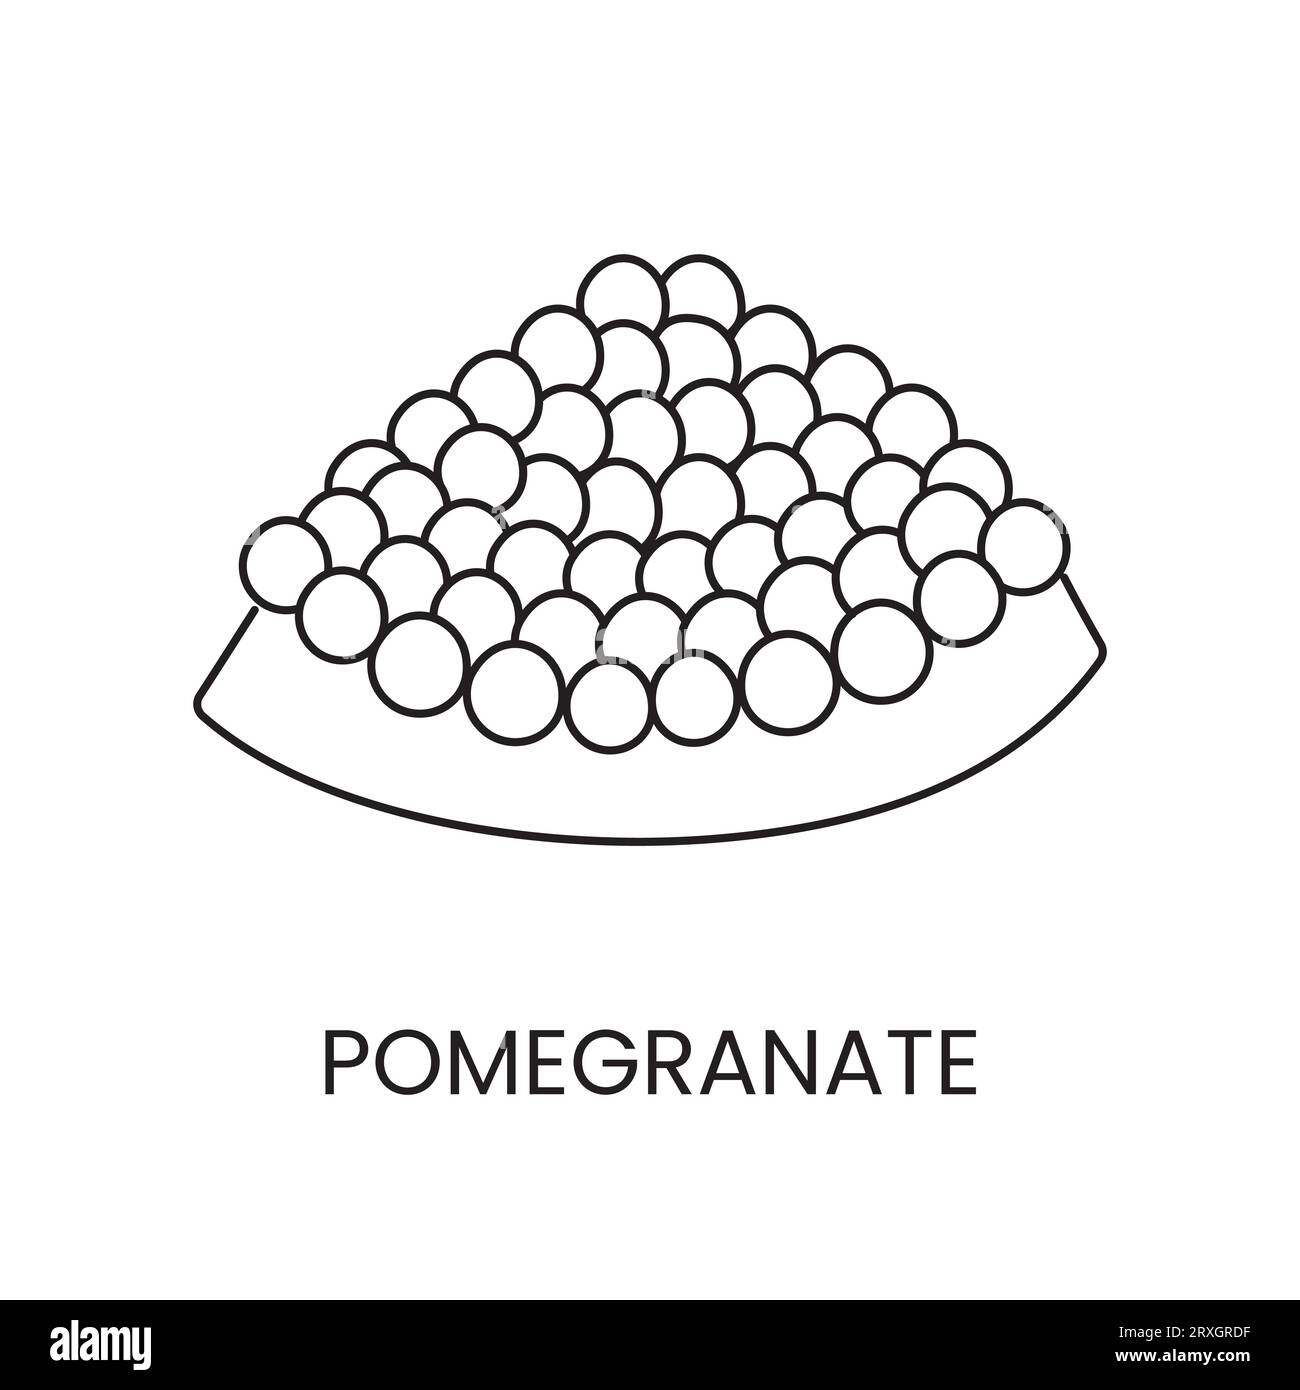 Pomegranate line icon in vector, fruit illustration Stock Vector